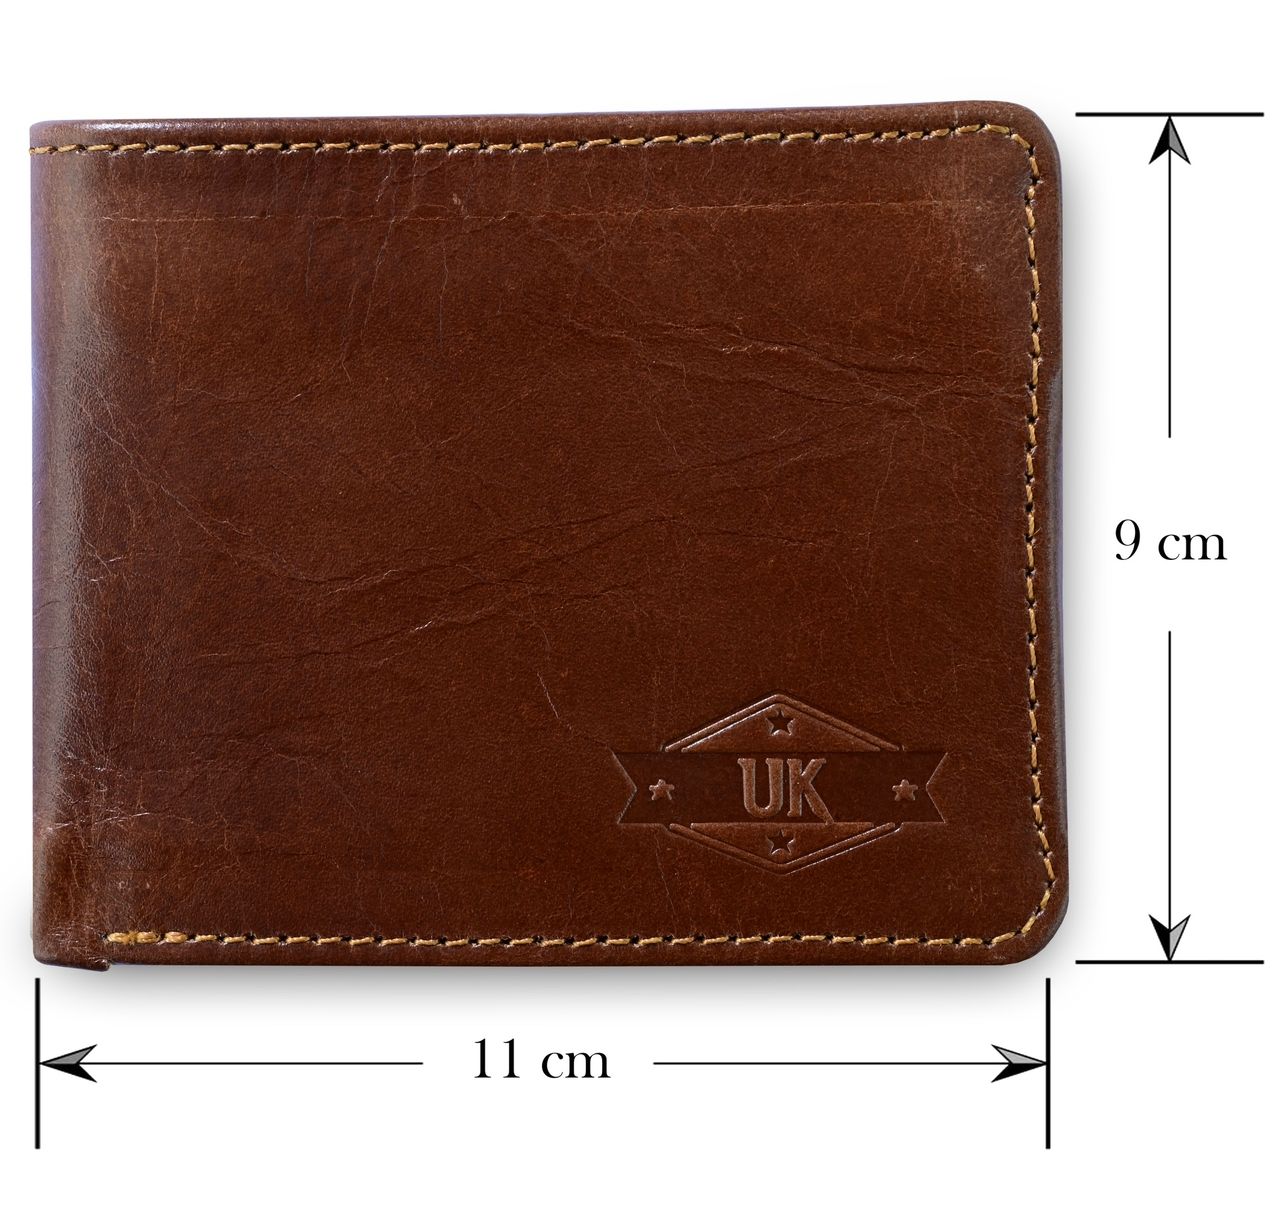 Urban Kevlar Genuine Leather Wallet - Classic Men's Bifold Wallet Plain Brown